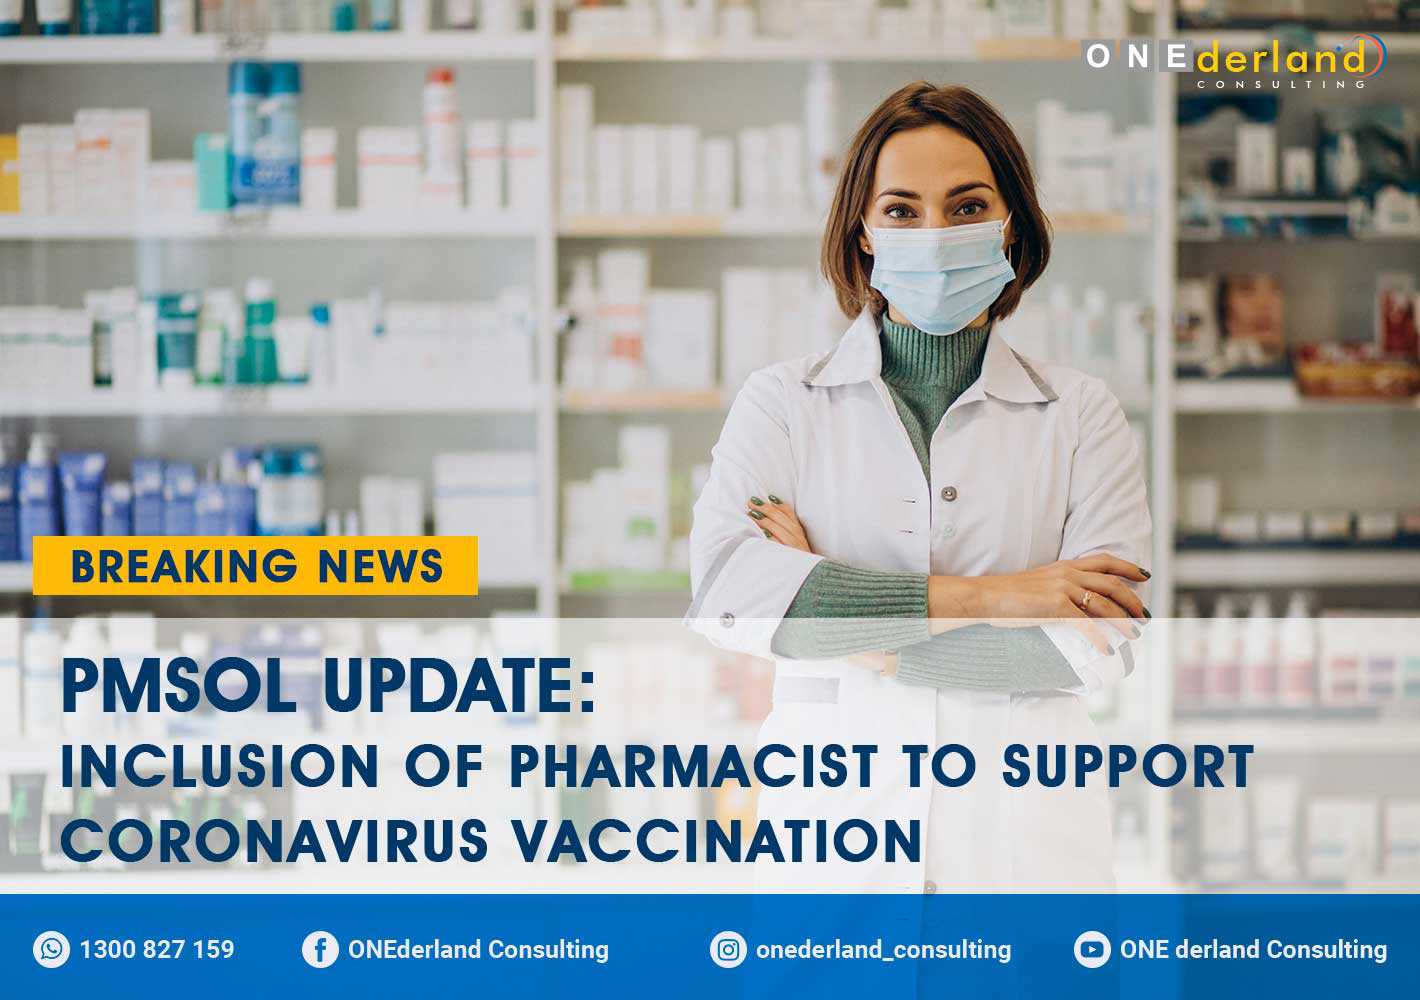 Pharmacist is now part of PMSOL to support Coronavirus Vaccine